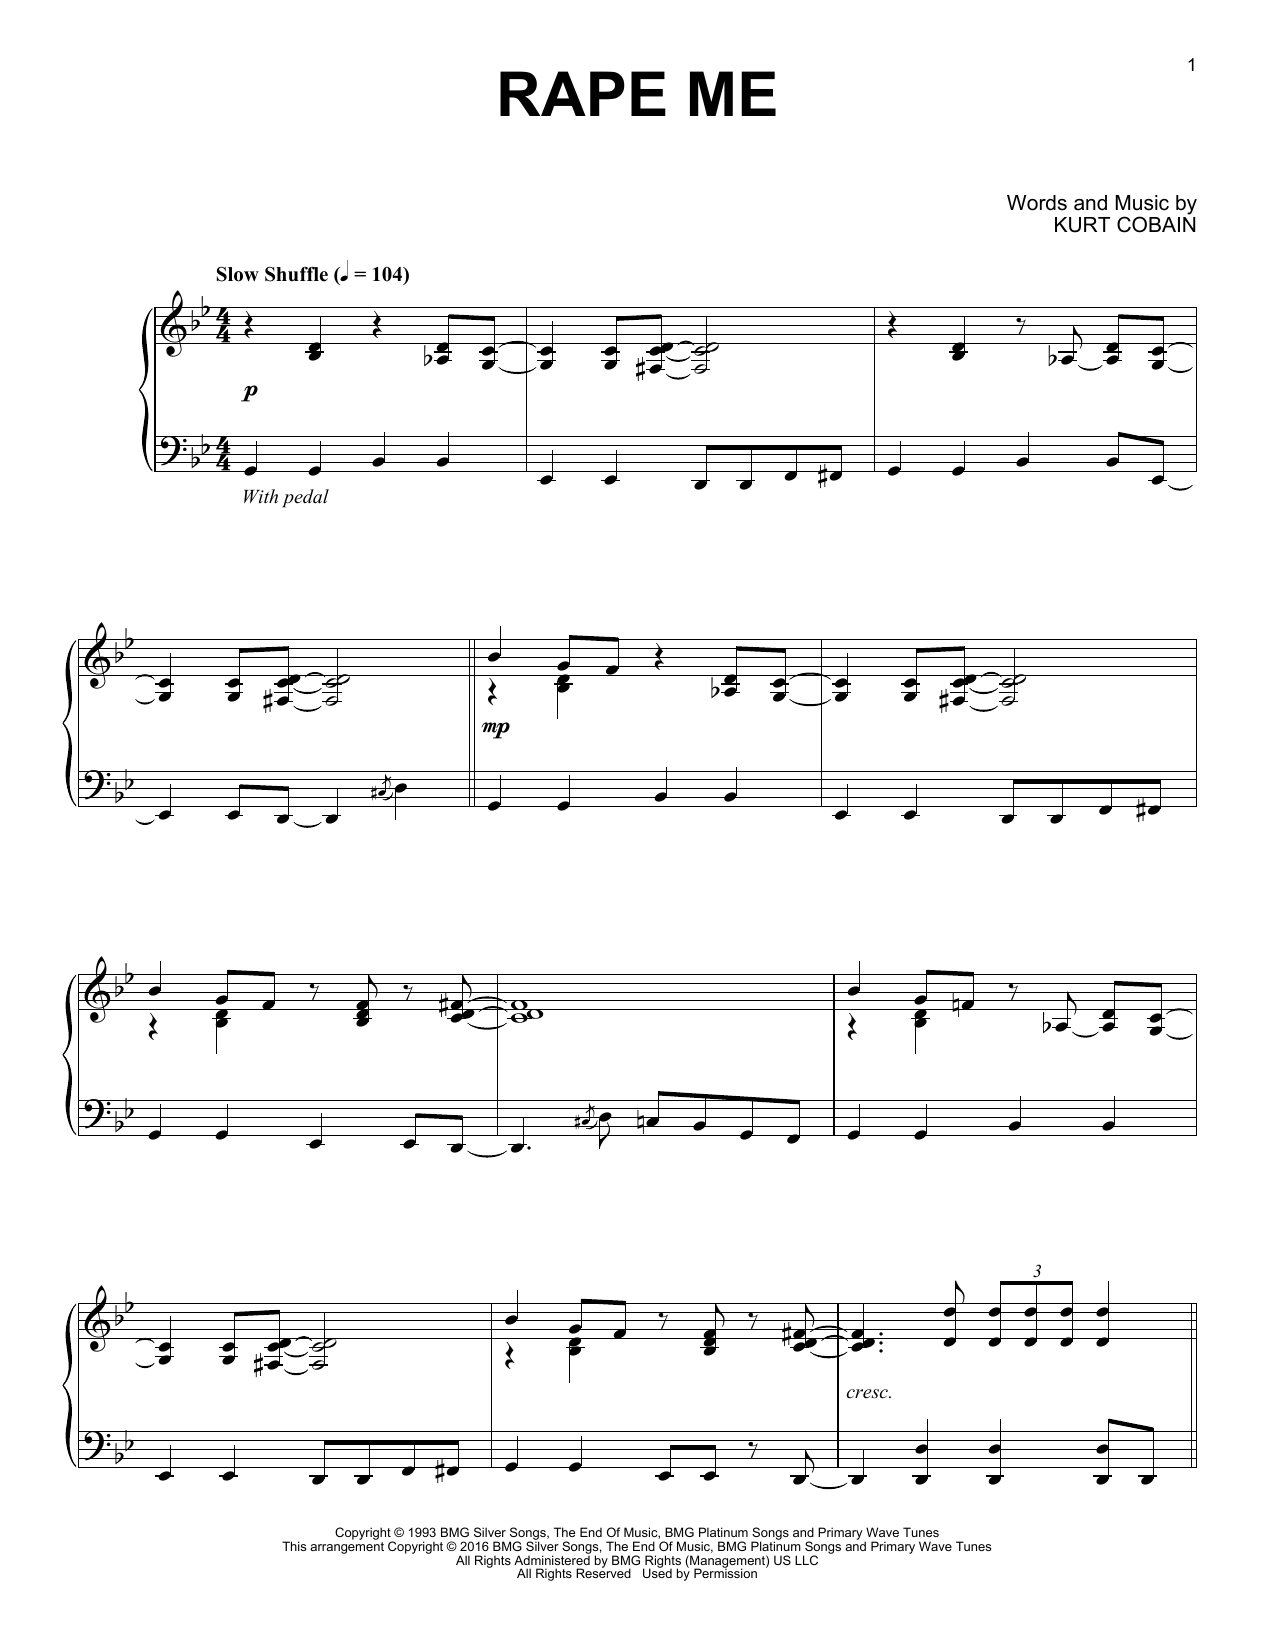 Nirvana Rape Me [Jazz version] Sheet Music Notes & Chords for Piano - Download or Print PDF